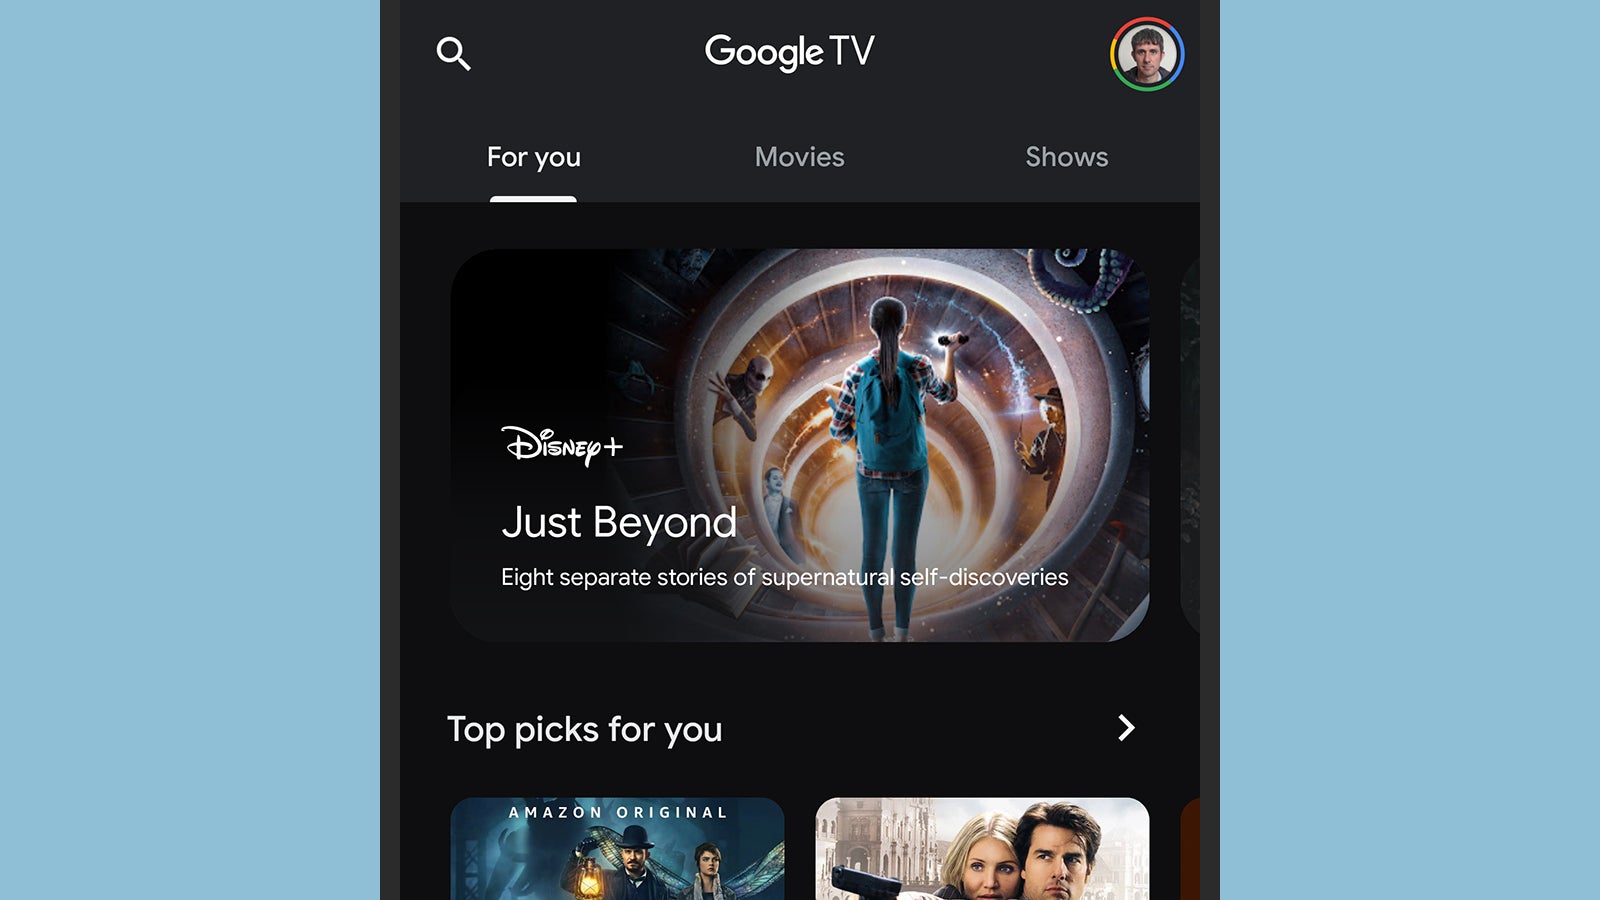 Google TV will keep recommending new content. (Screenshot: Google TV)